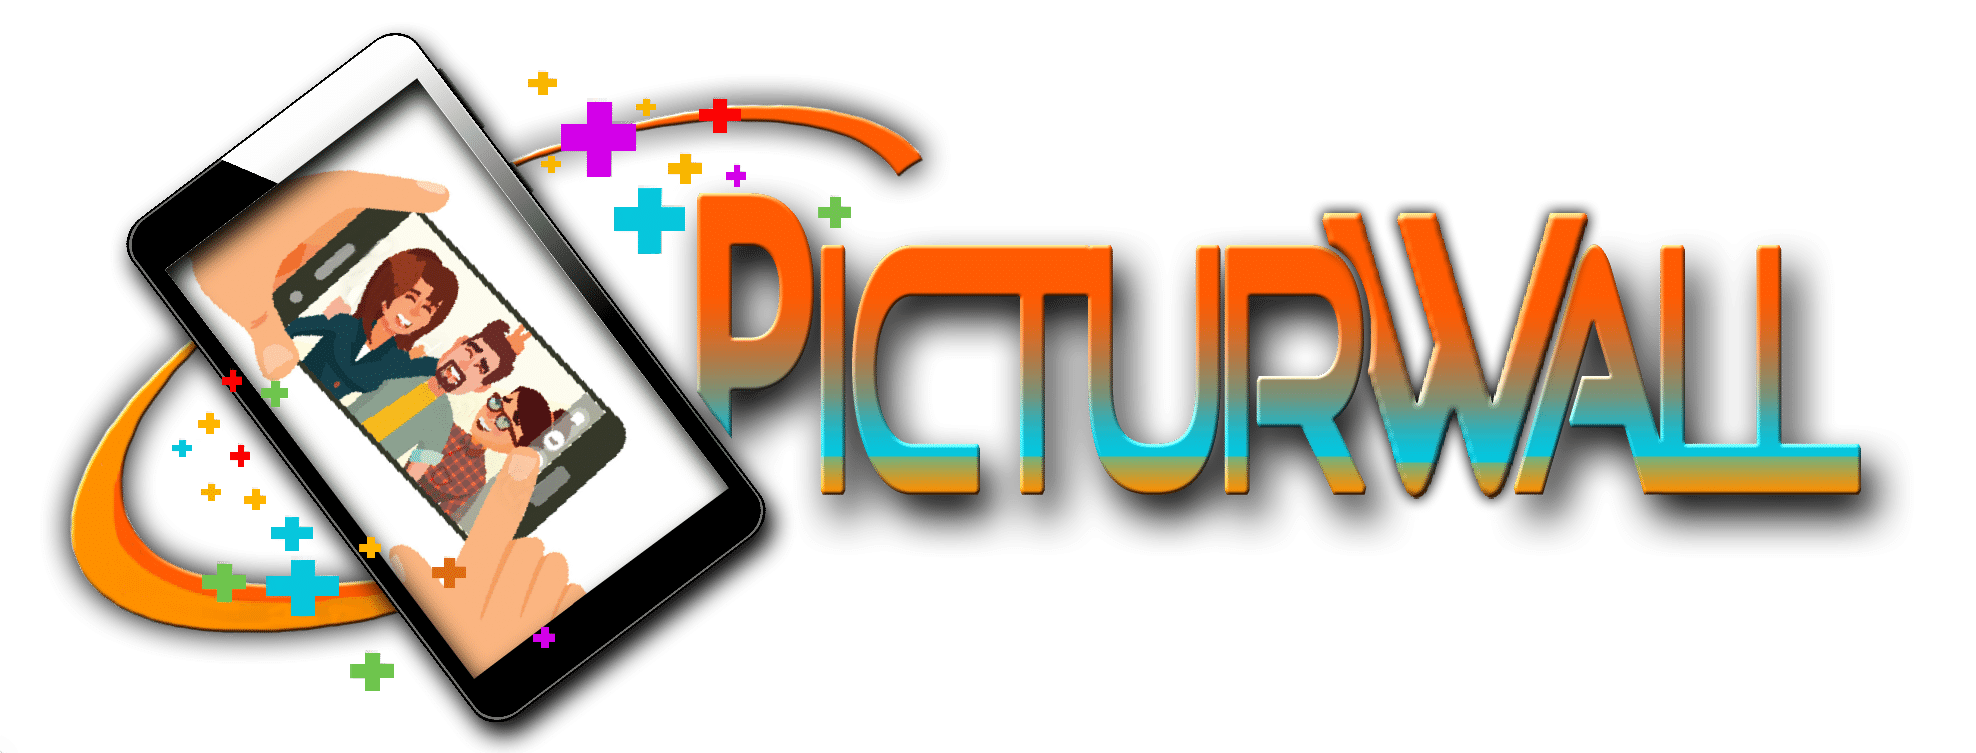 PicturWall - Logo de PicturWall - DIY Photobooth anniversaire - photobooth tarif